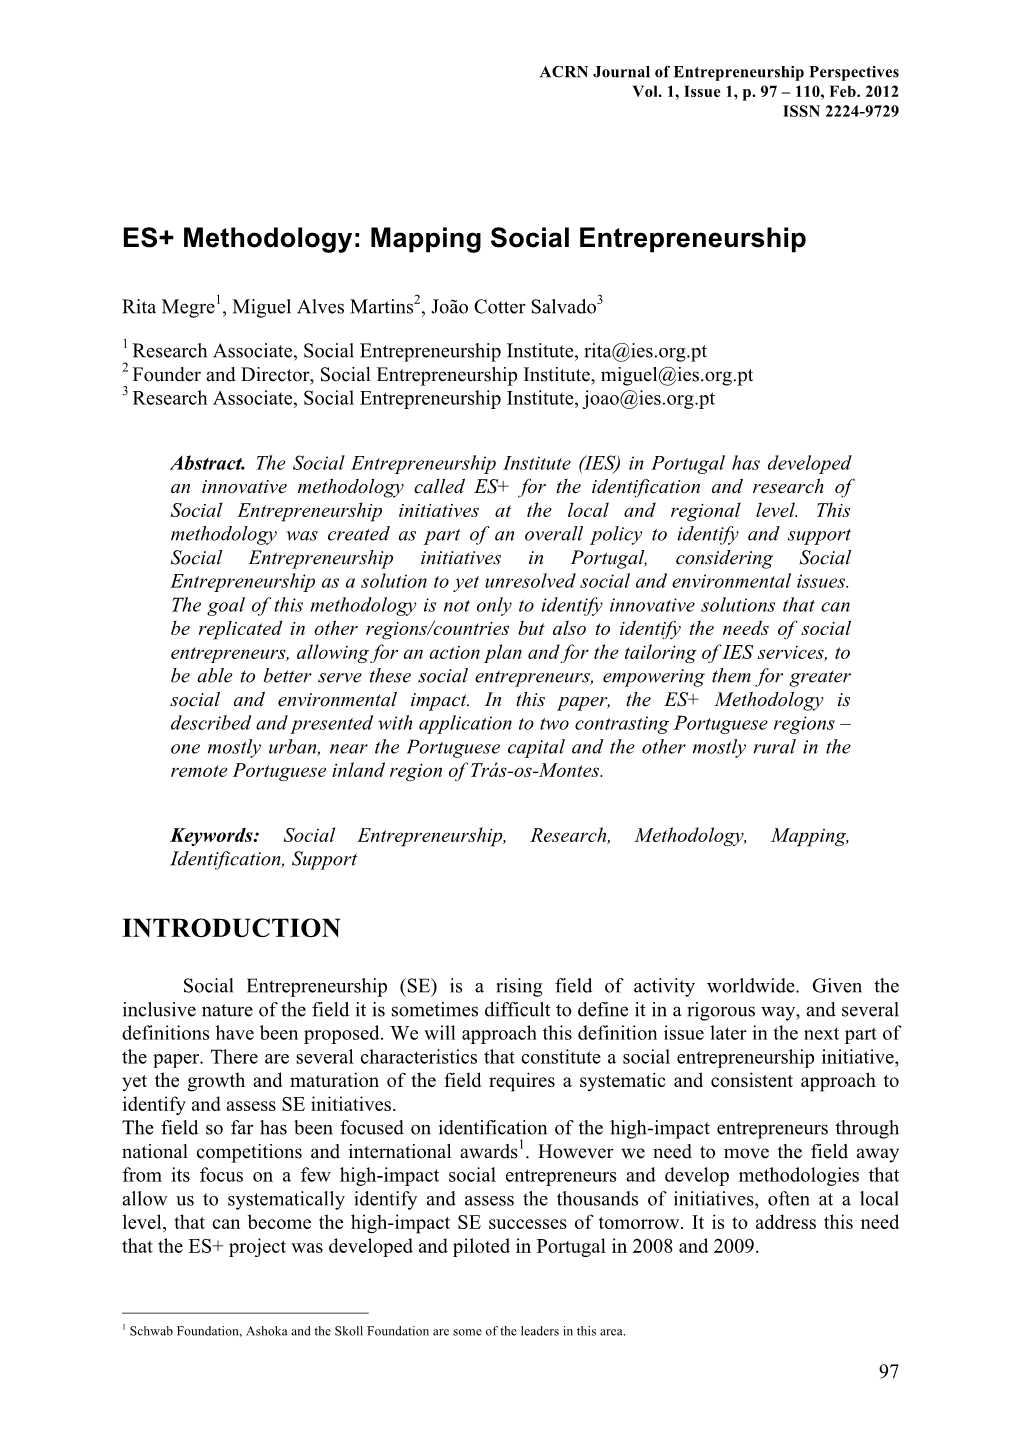 ES+ Methodology: Mapping Social Entrepreneurship INTRODUCTION